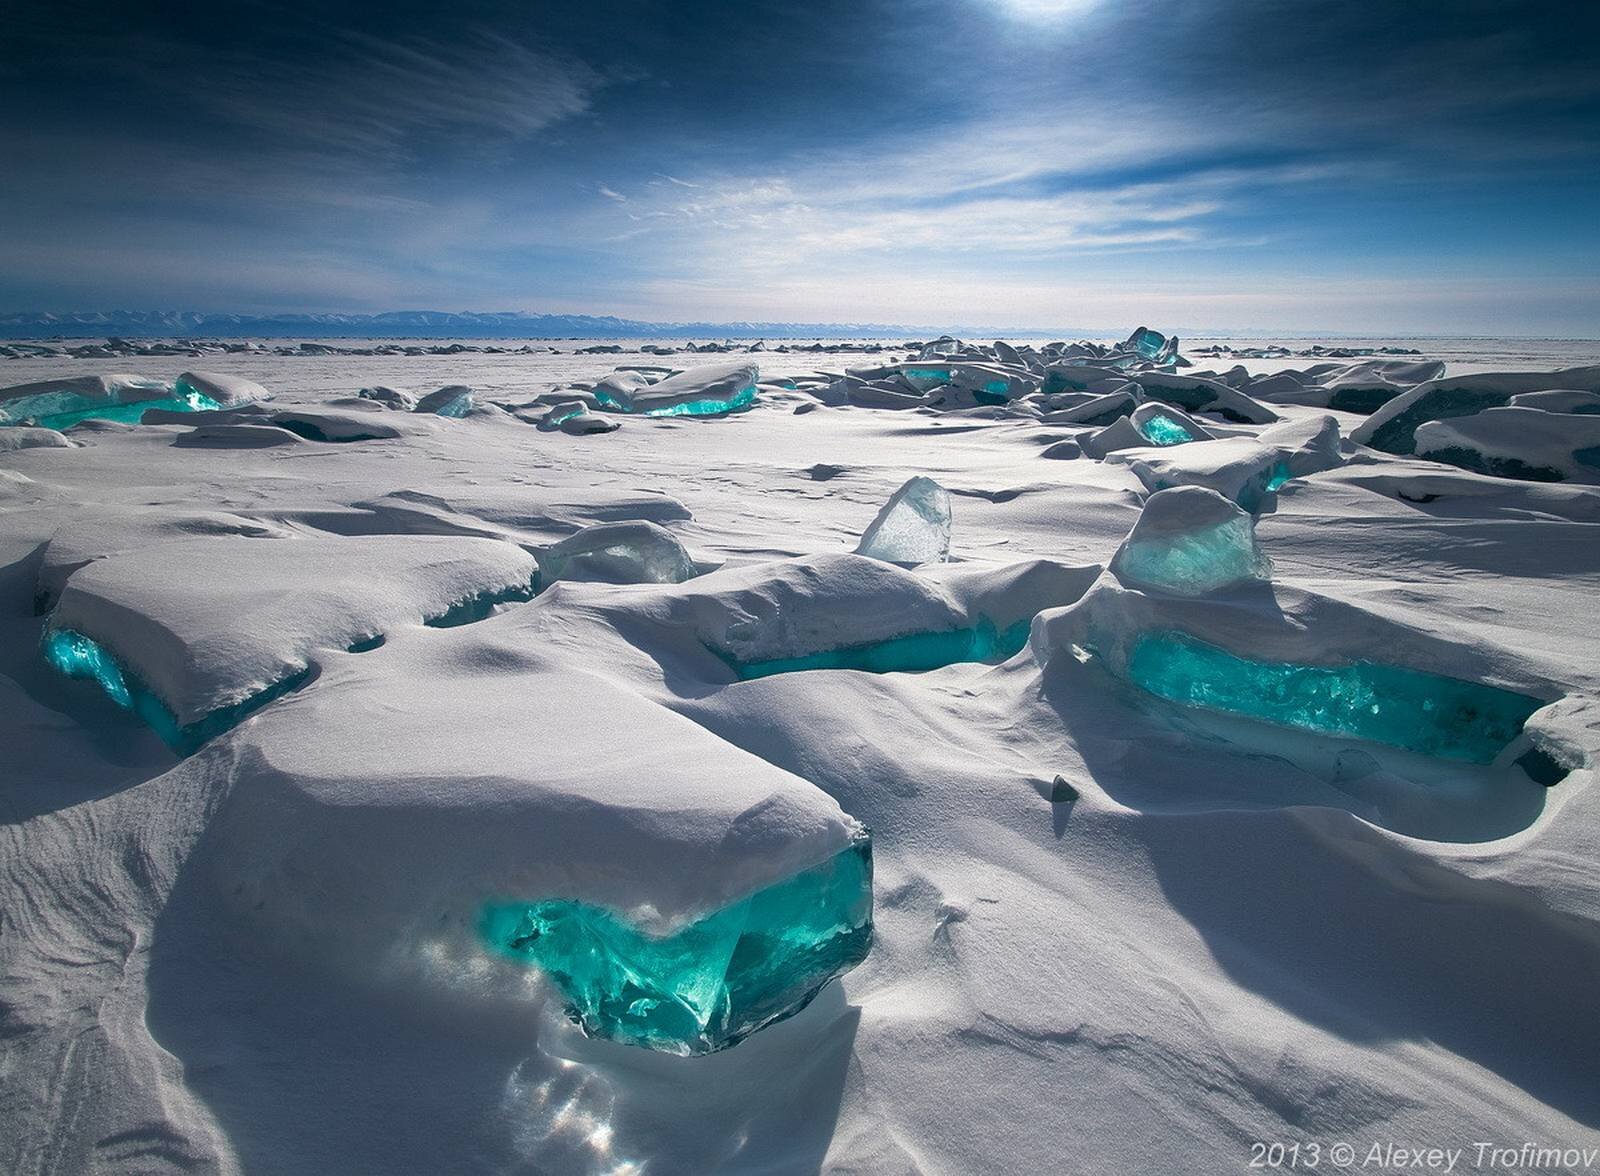 More information about "Η παρατεταμένη θερμότητα της Σιβηρίας, αποδίδεται στην κλιματική αλλαγή"